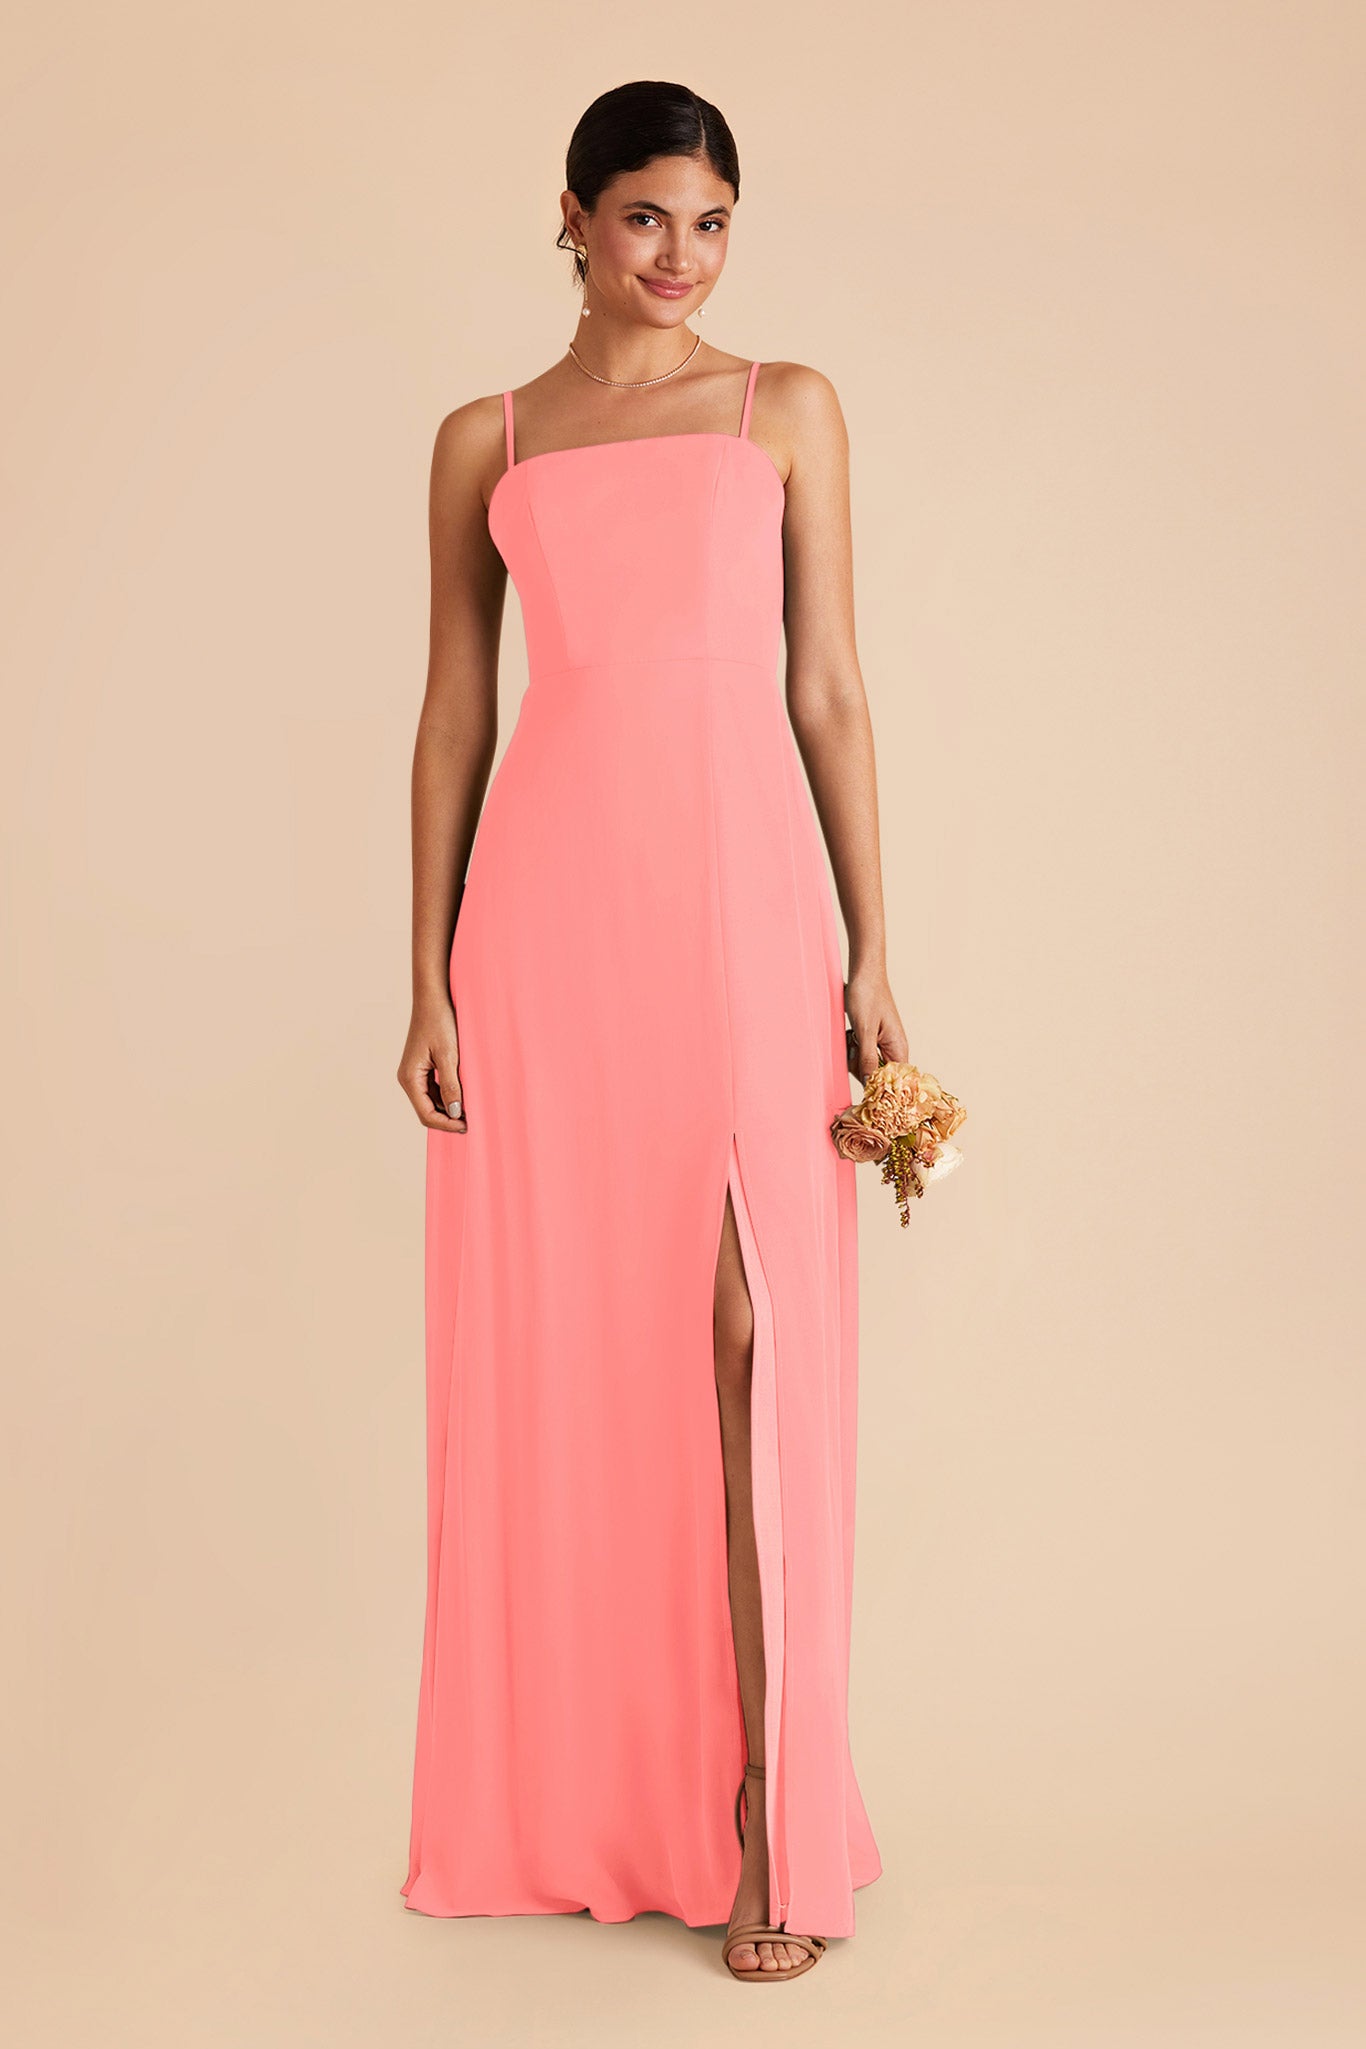 Coral Pink Chris Convertible Chiffon Dress by Birdy Grey